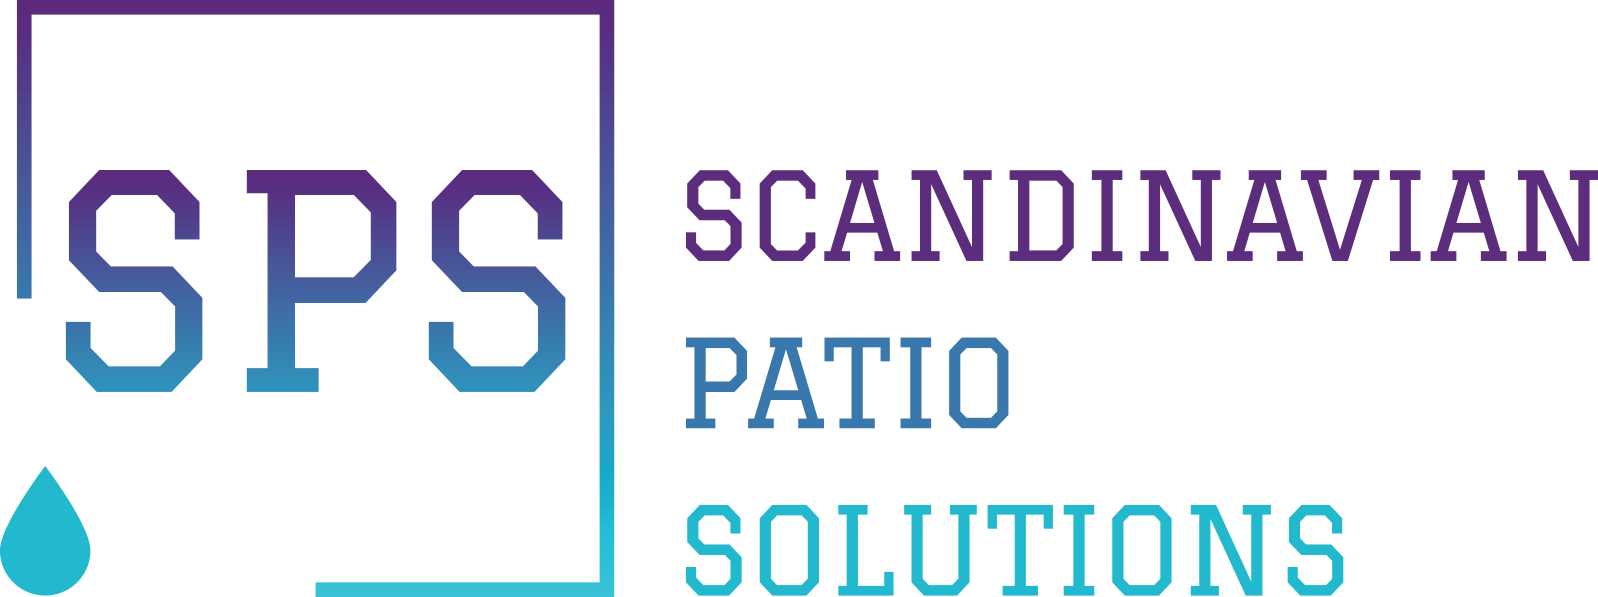 Scandinavian Patio Solutions AB